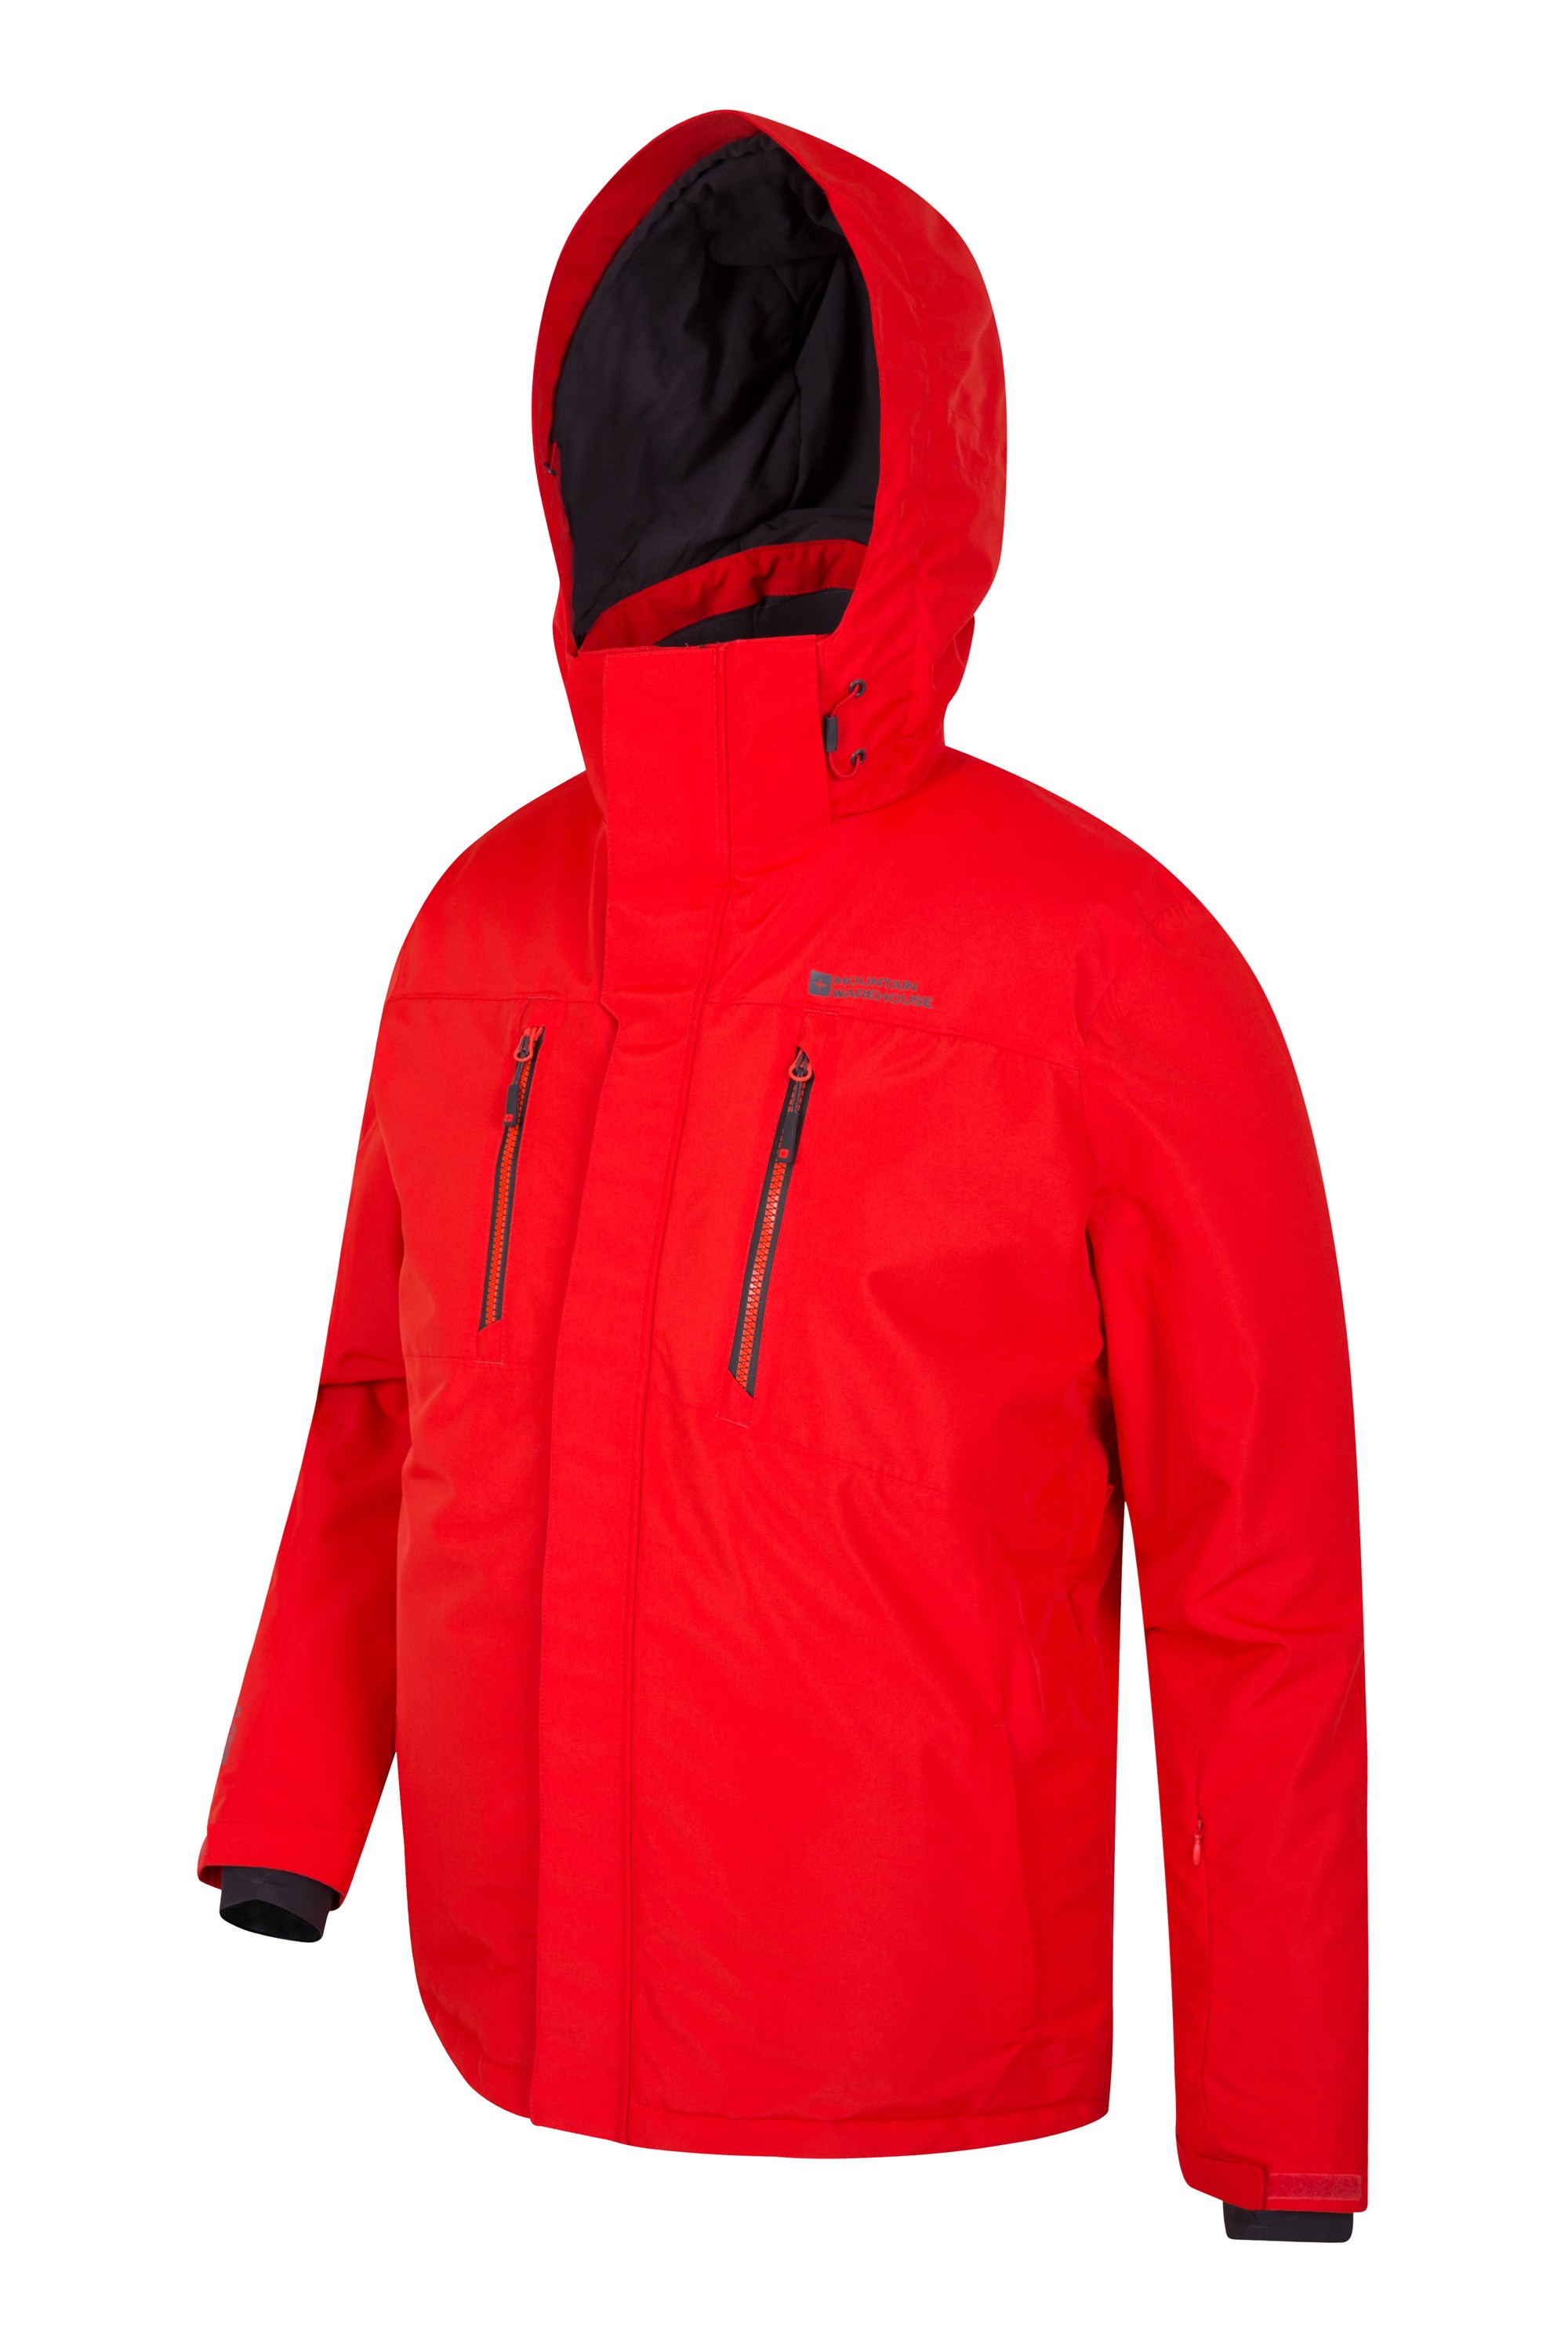 Mountain Warehouse Galaxy Mens Ski Jacket Waterproof Winter Coat 